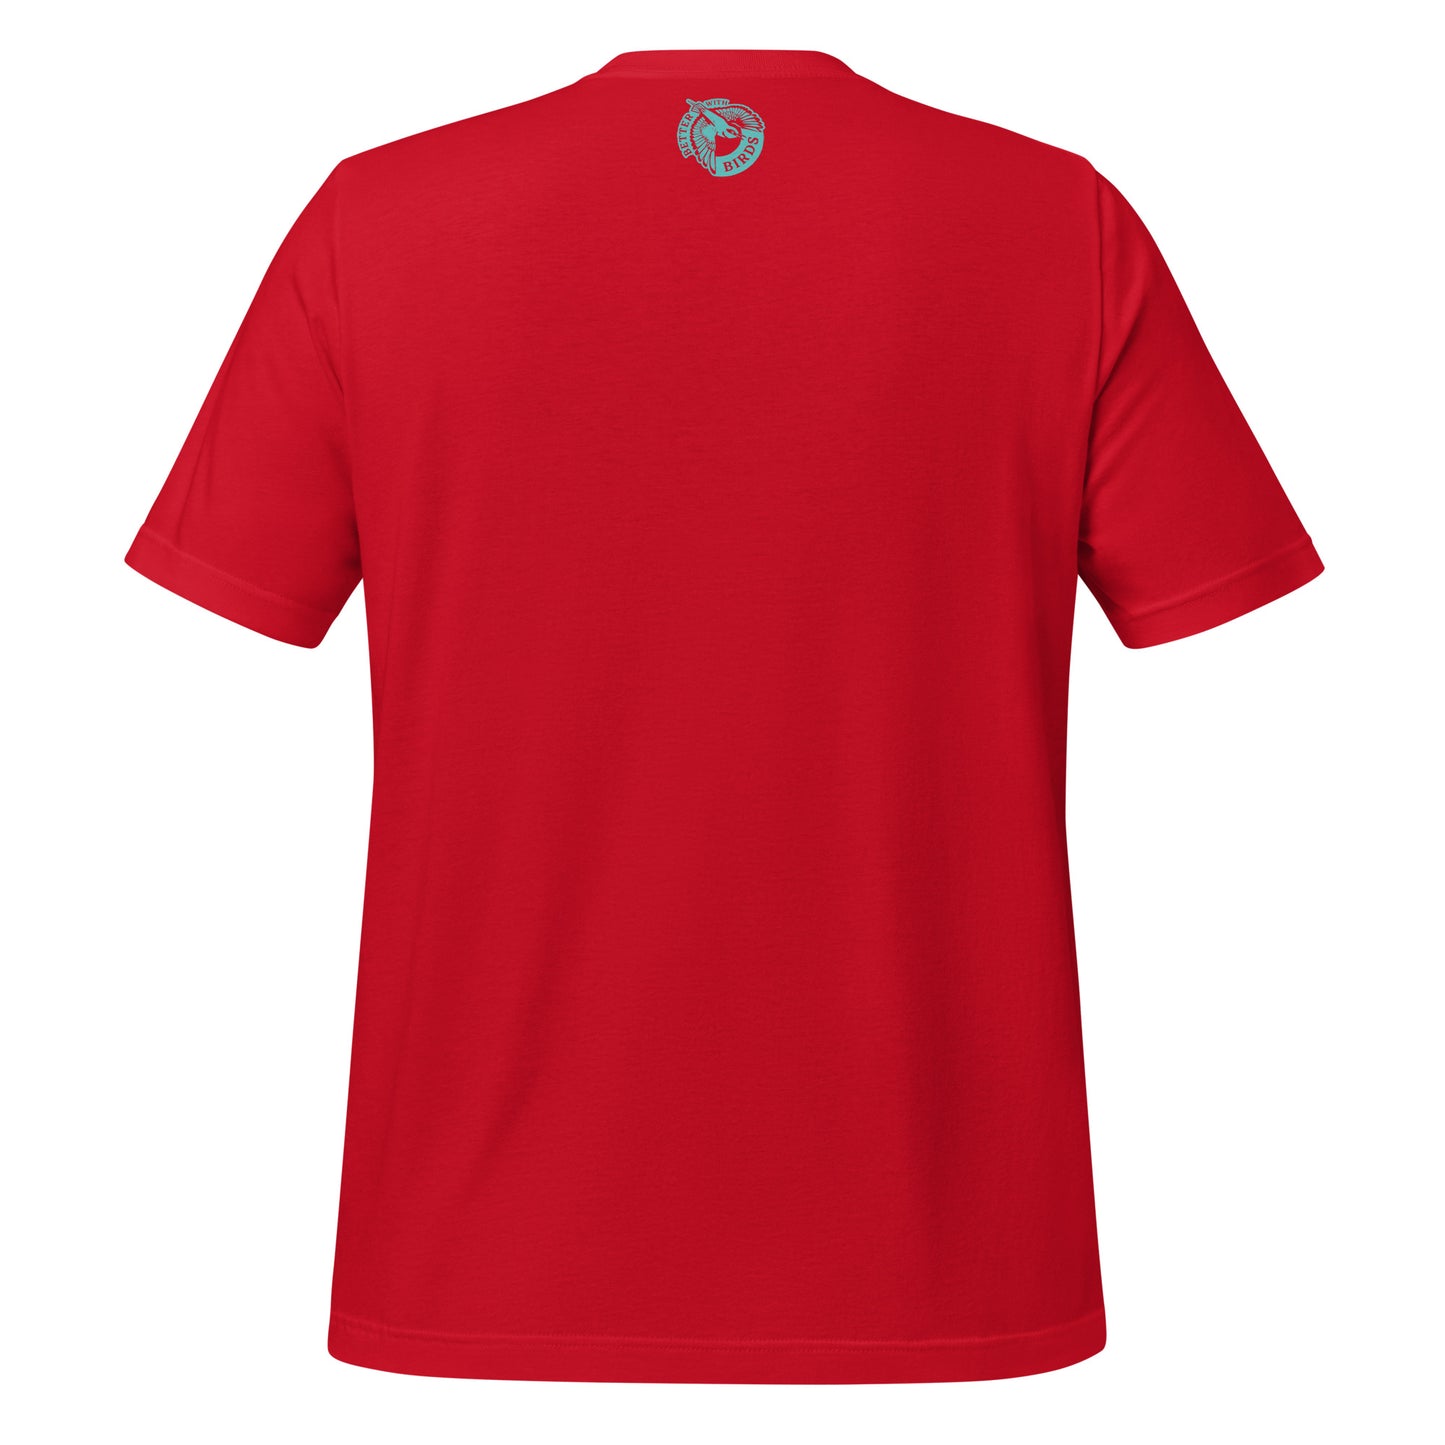 Eastern Towhee Lightweight Cotton Unisex T-Shirt